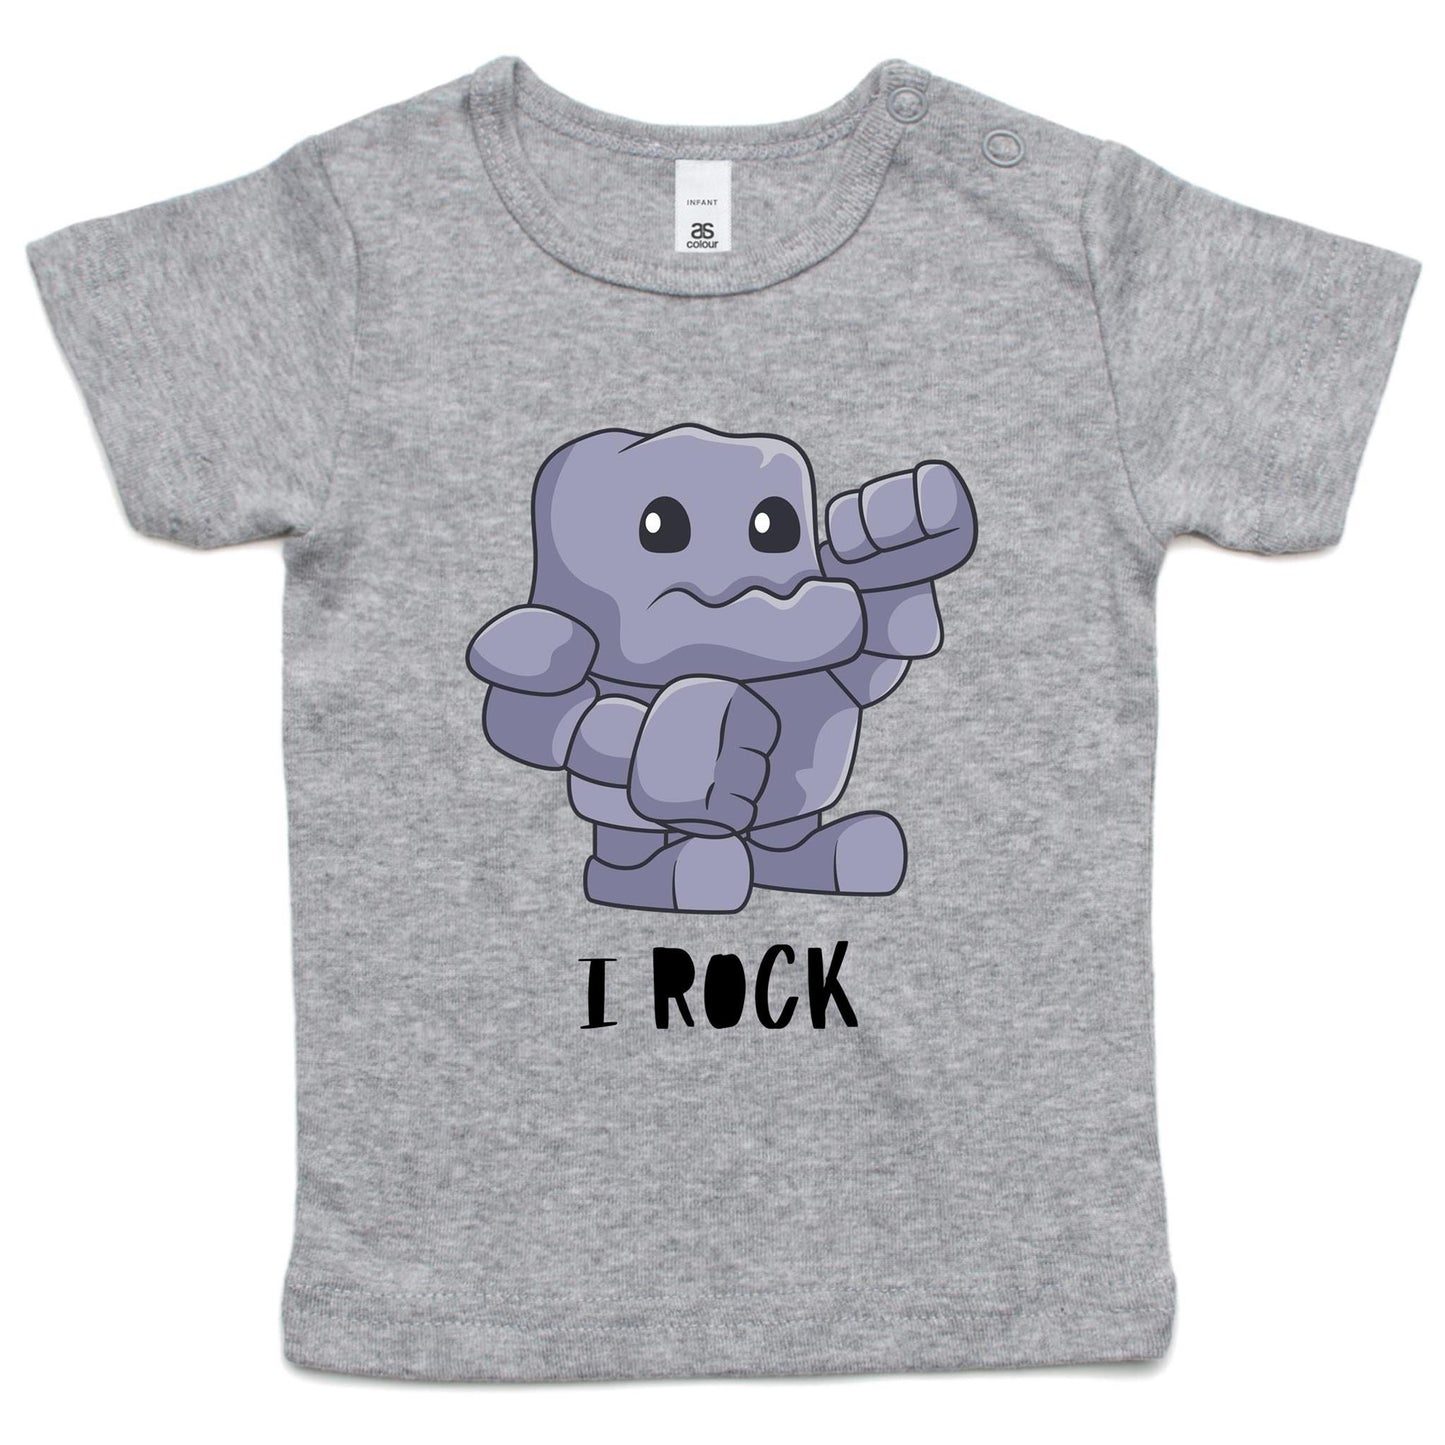 I Rock - Baby T-shirt Grey Marle Baby T-shirt Music